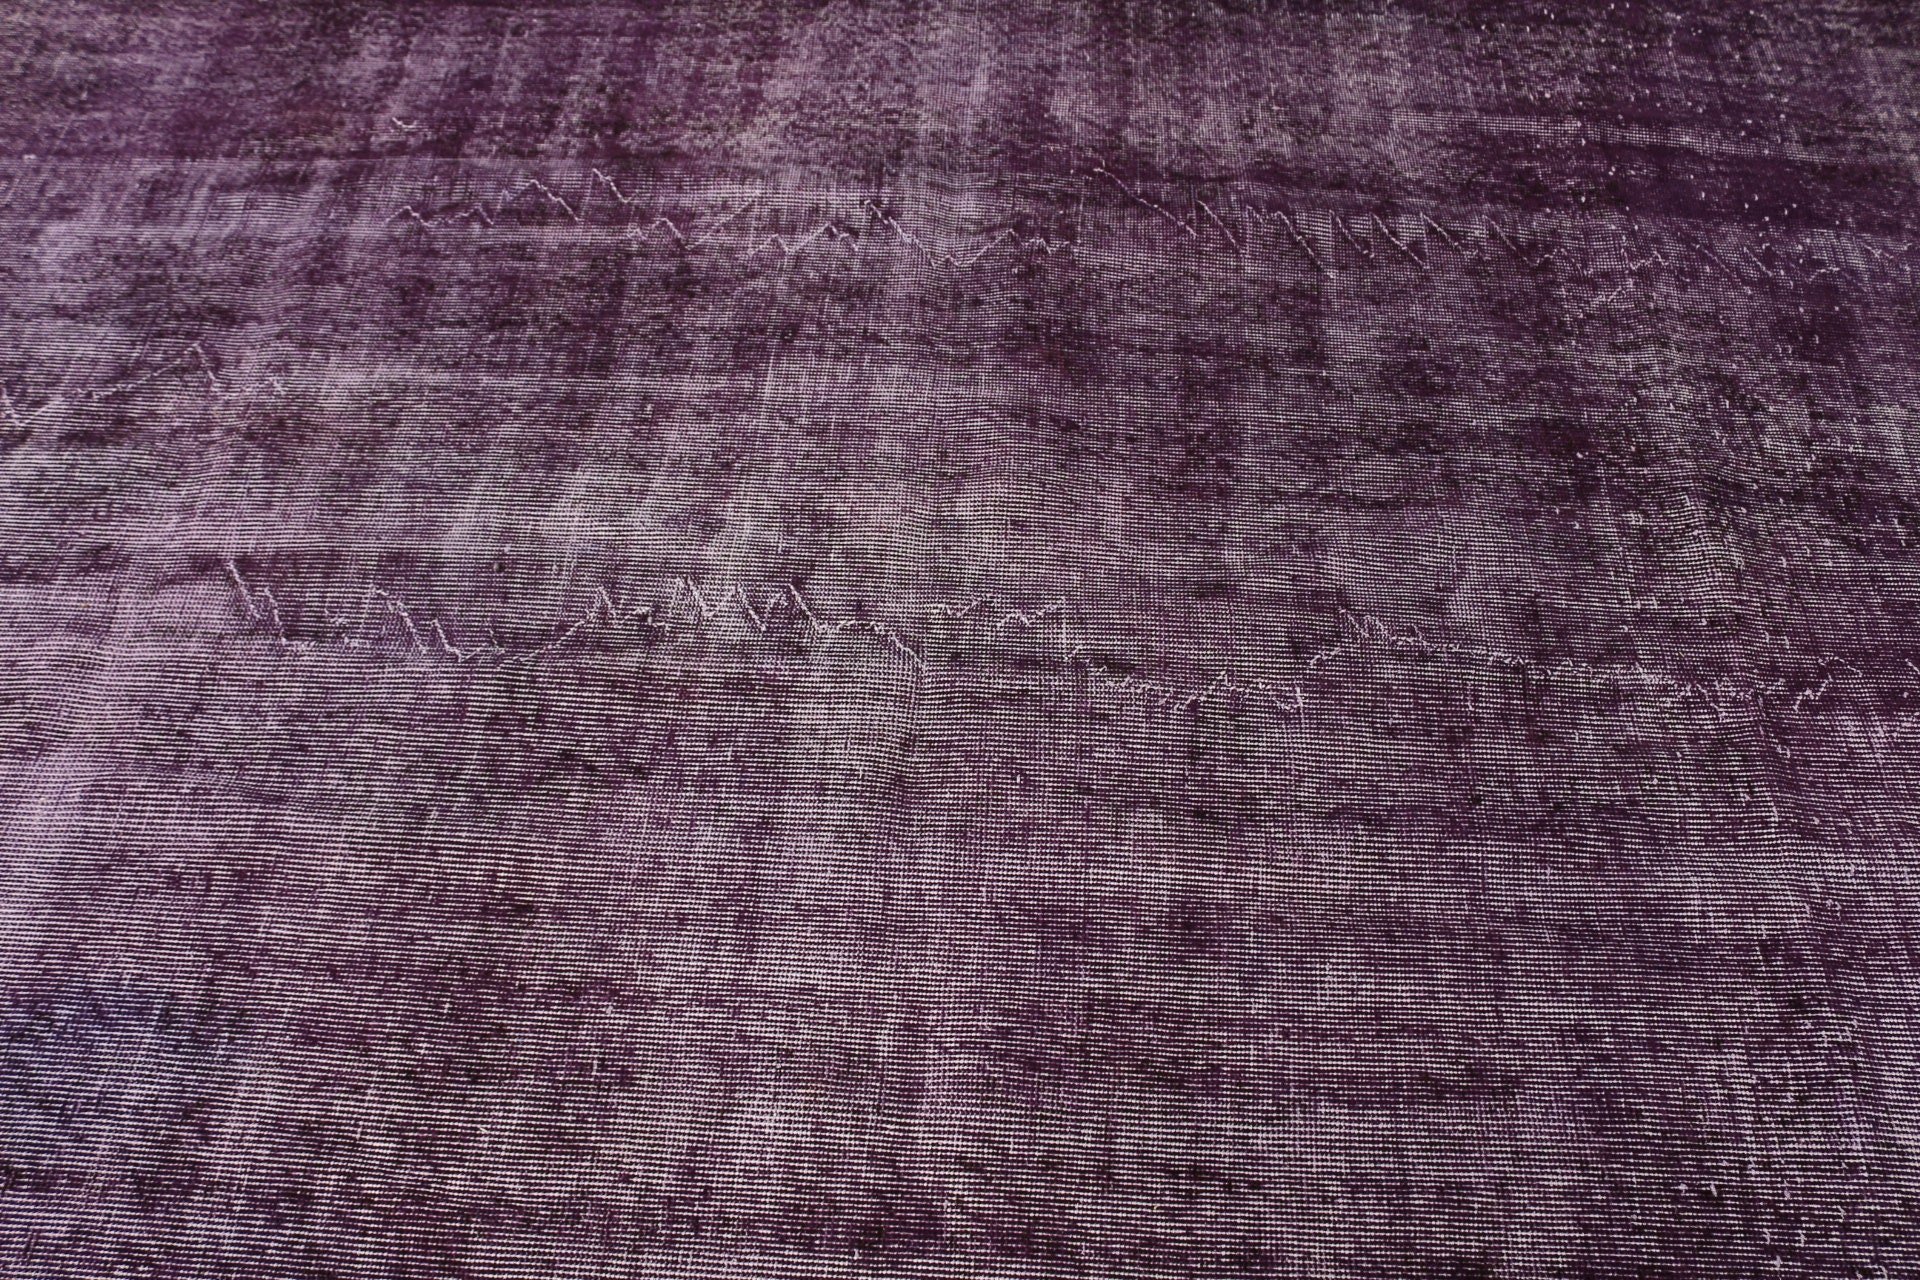 5.9x9.3 ft Large Rugs, Turkish Rug, Dining Room Rug, Cool Rugs, Purple Bedroom Rugs, Rugs for Salon, Tribal Rug, Vintage Rug